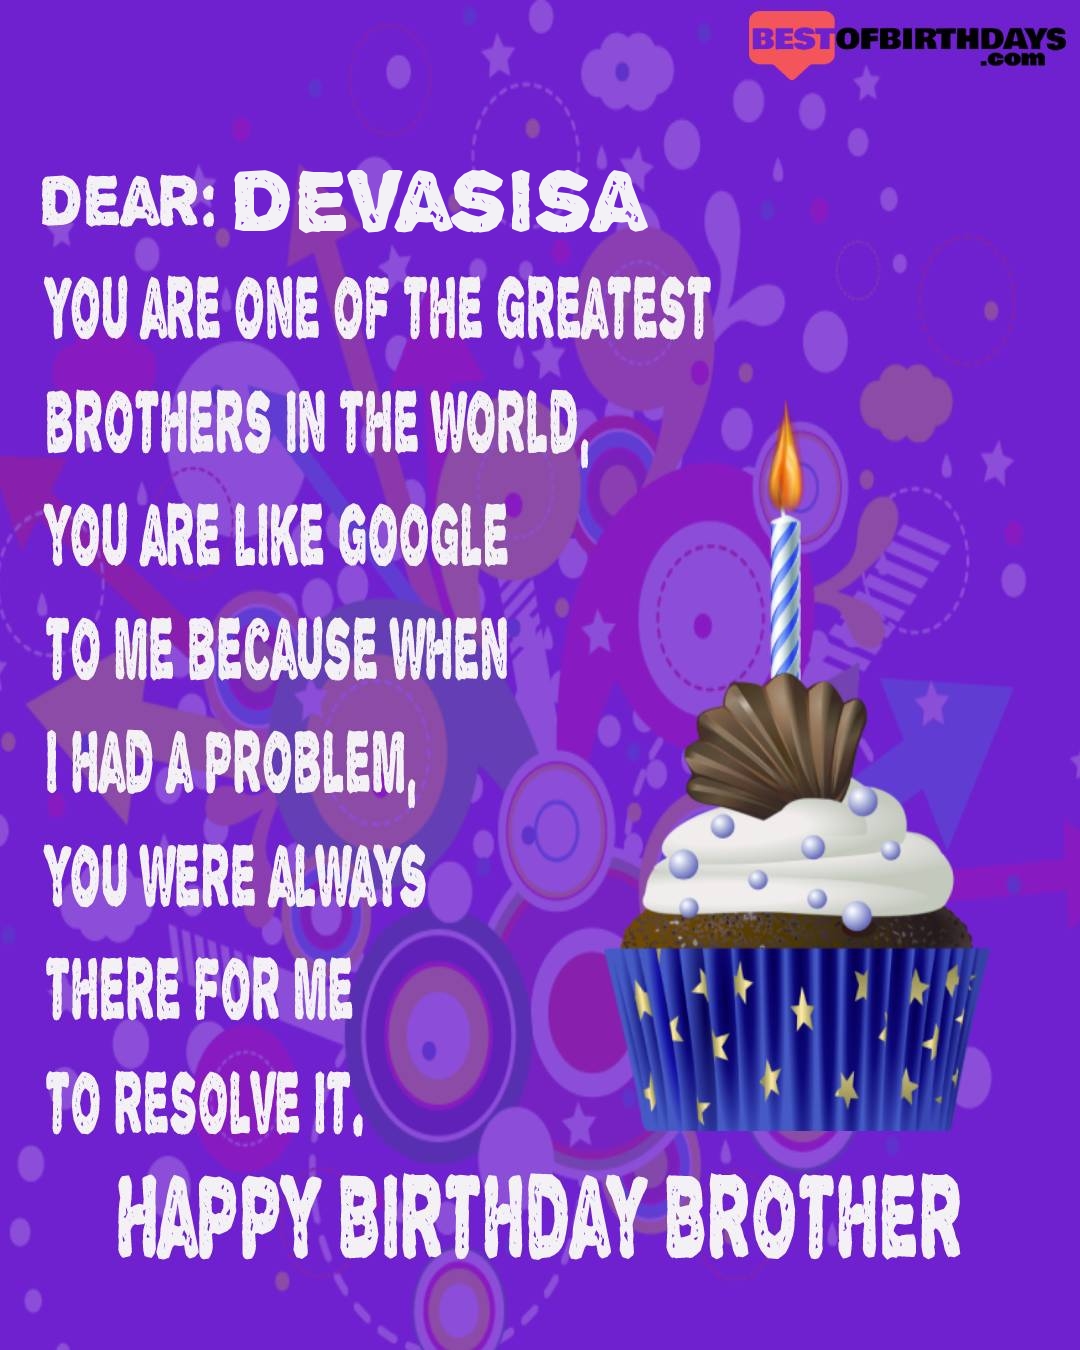 Happy birthday devasisa bhai brother bro